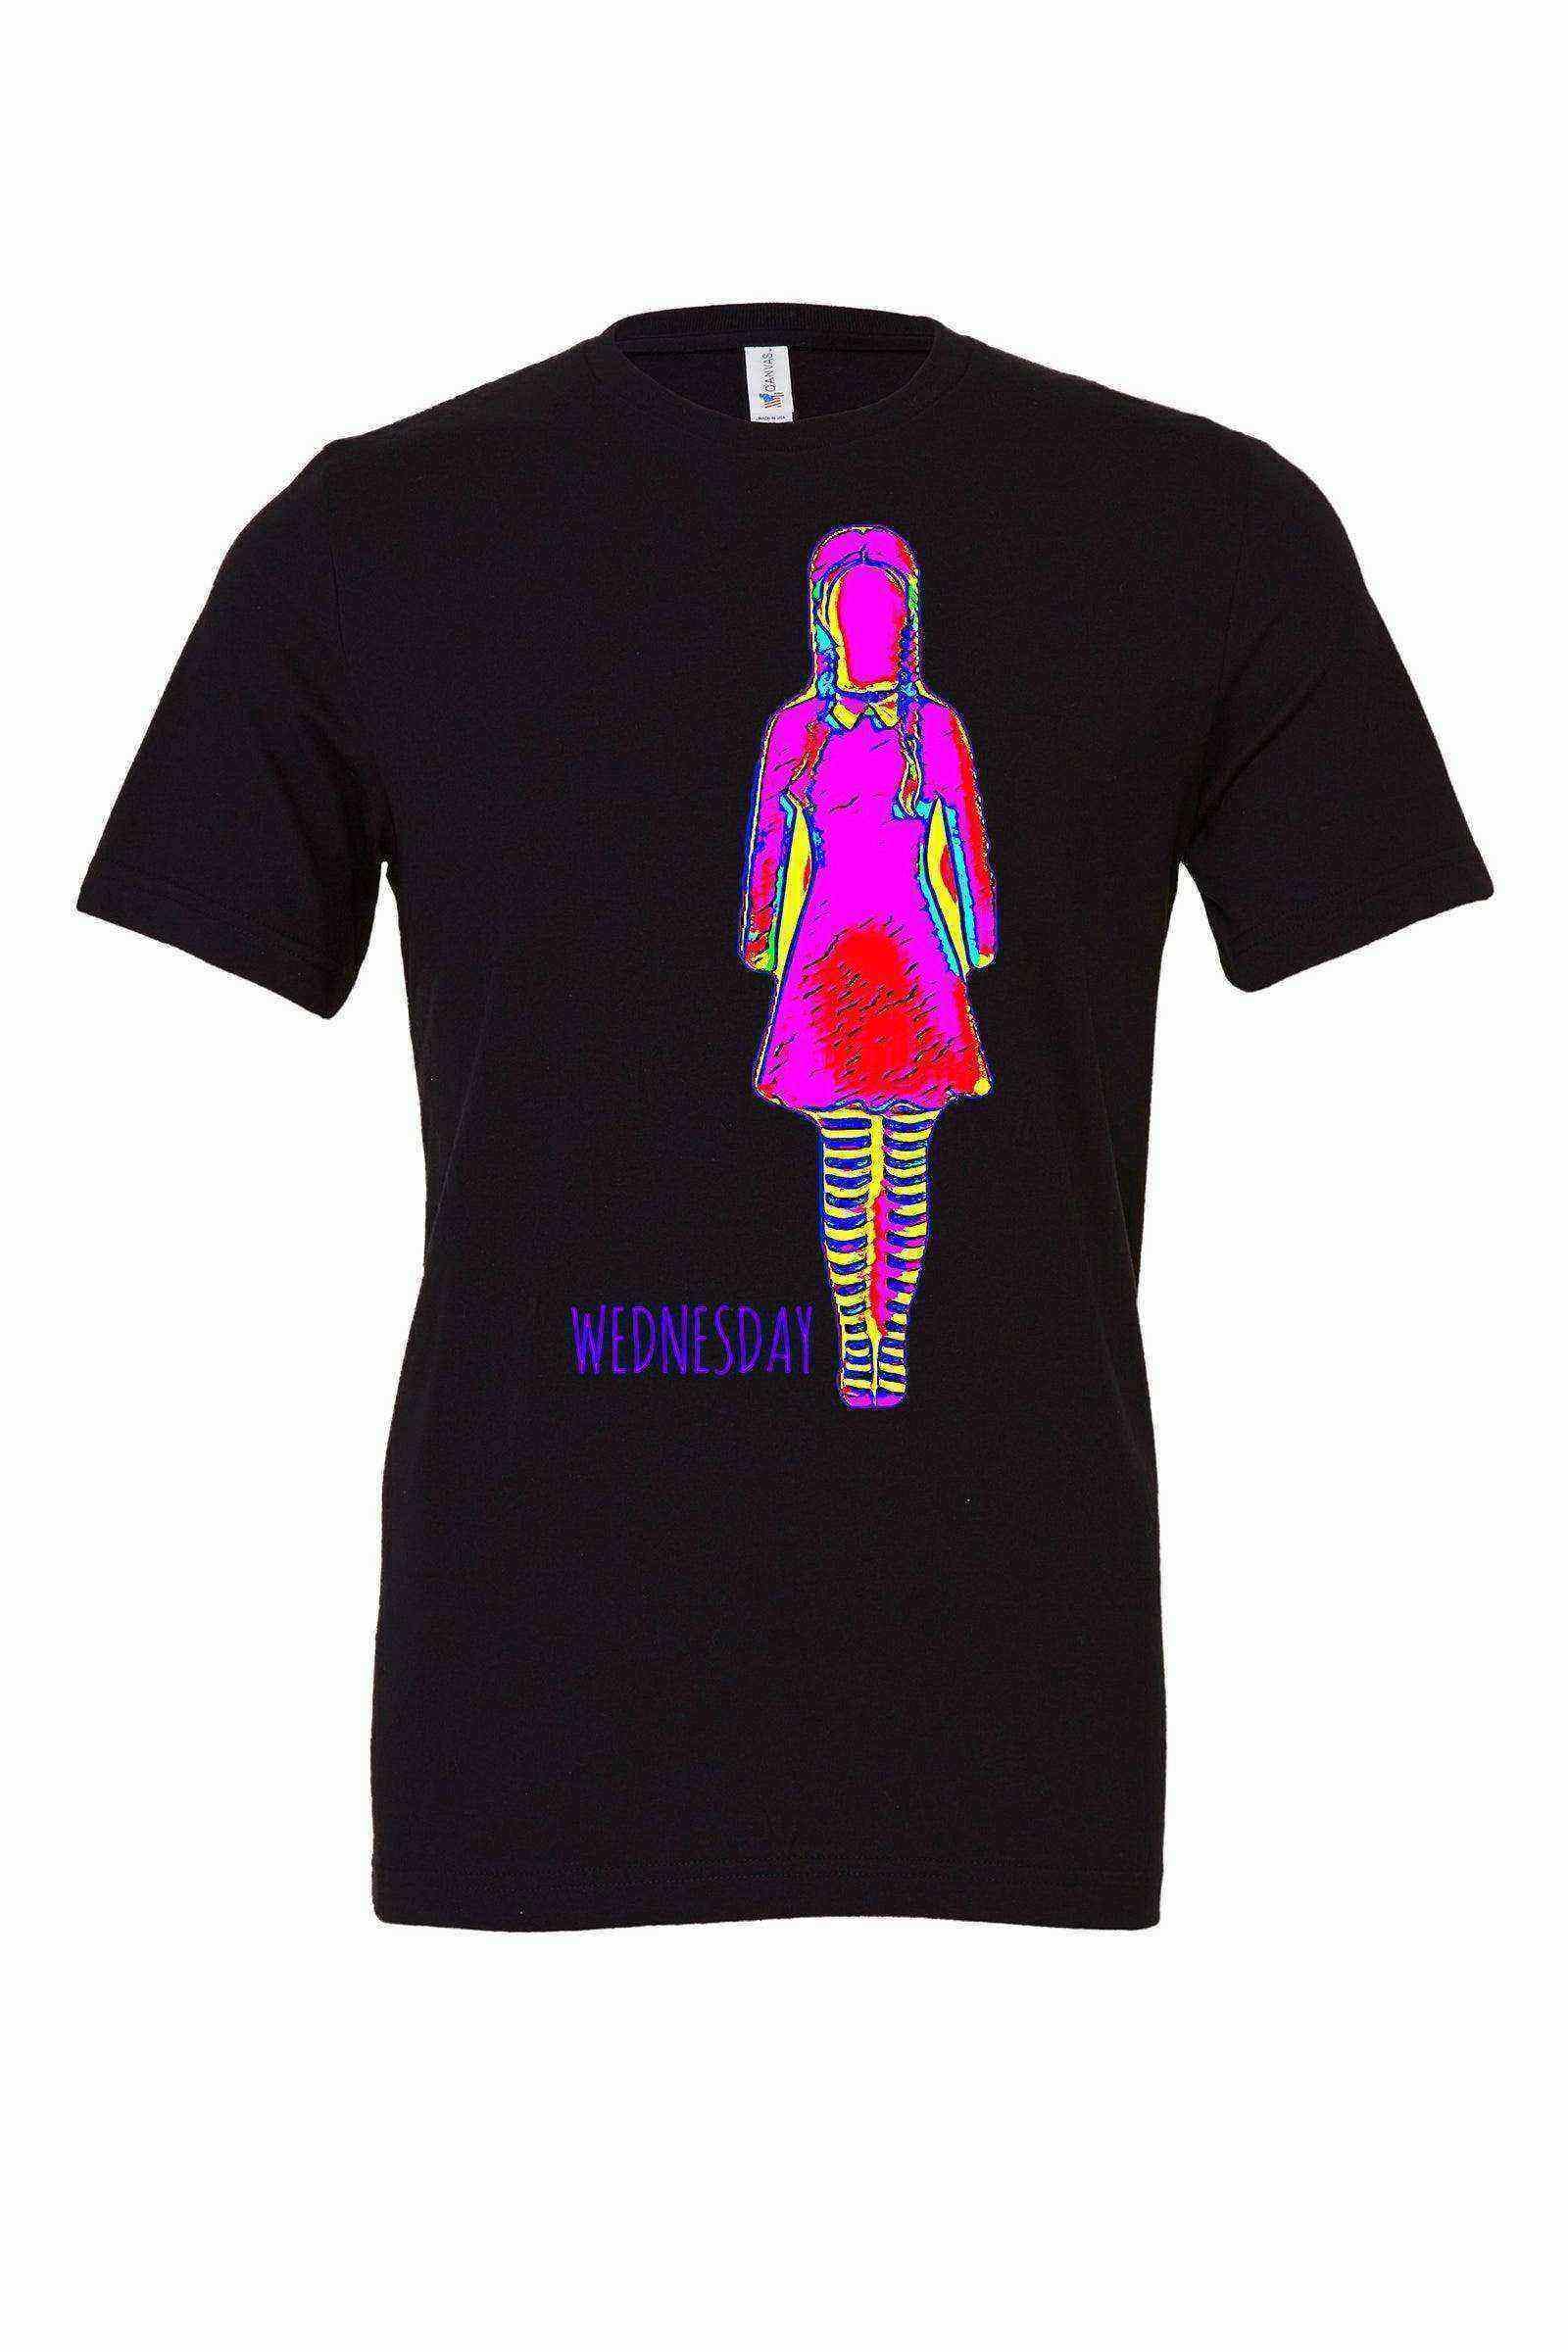 Toddler | Neon Wednesday Shirt | Wednesday Shirts | Addams Shirt - Dylan's Tees